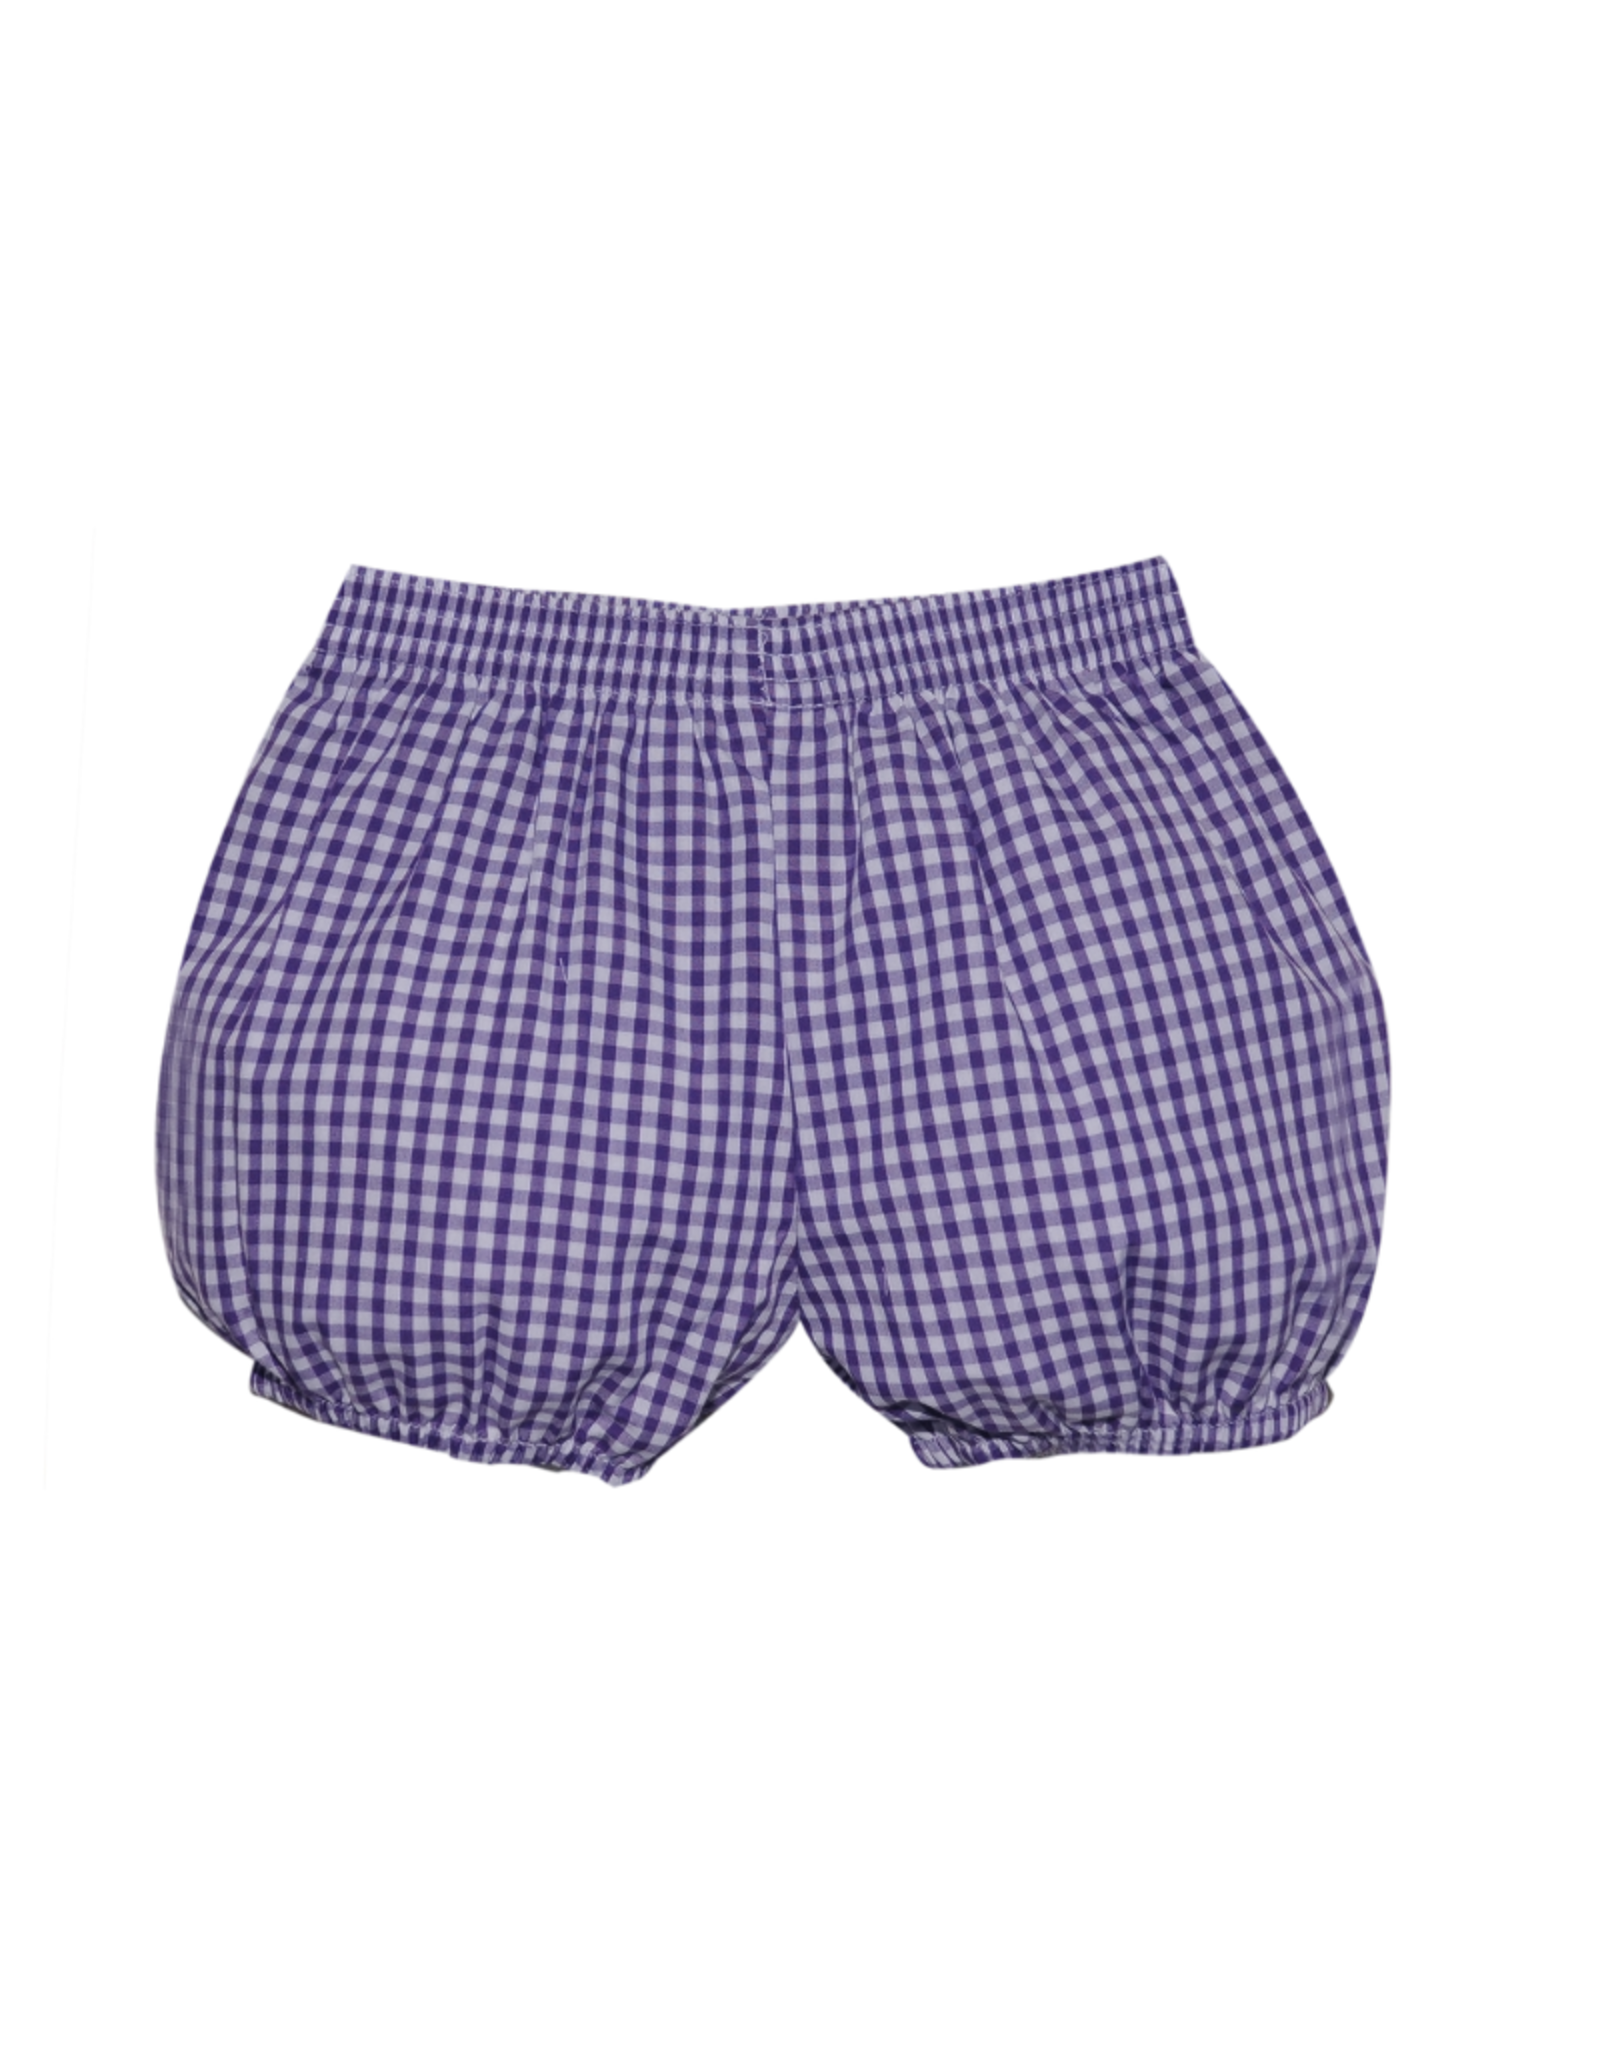 Southern Saturday Purple Gingham Bloomer Shorts